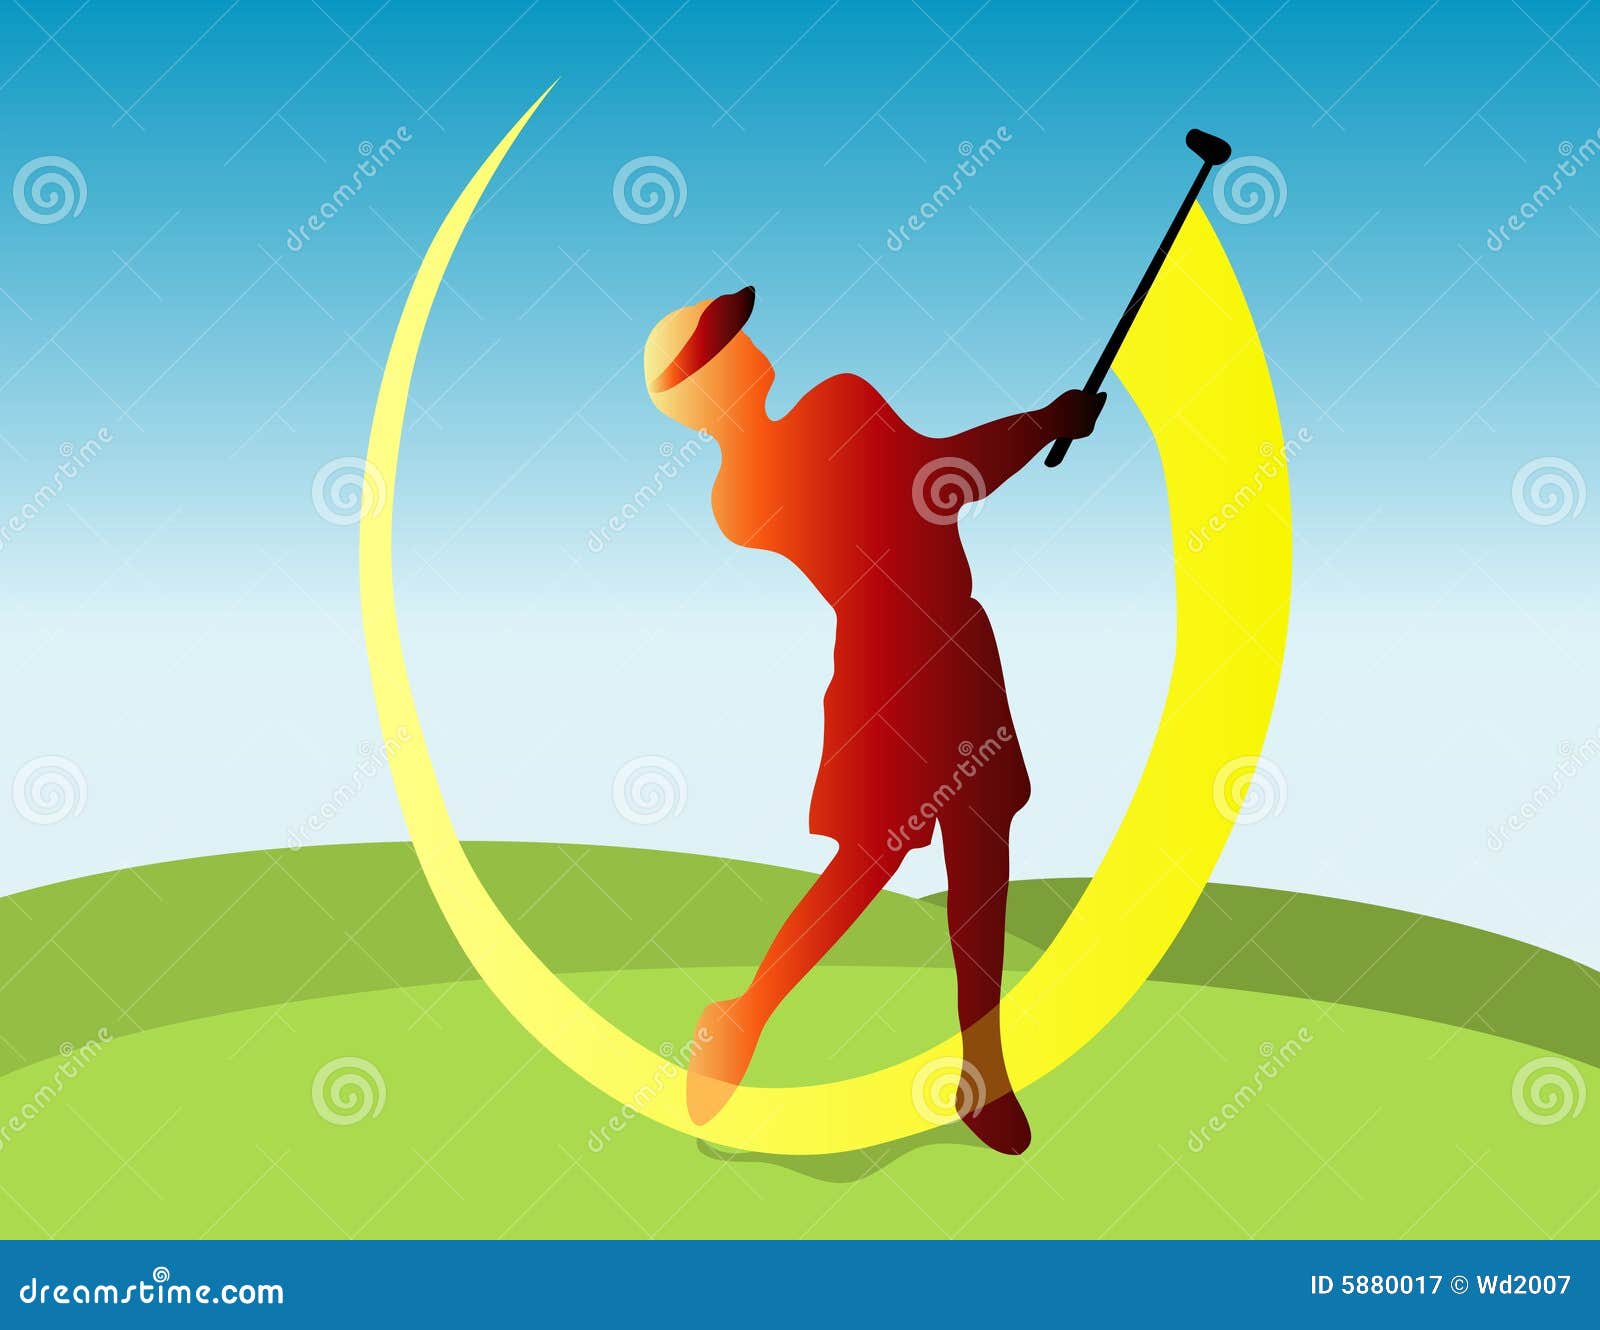 free clipart golf swing - photo #42